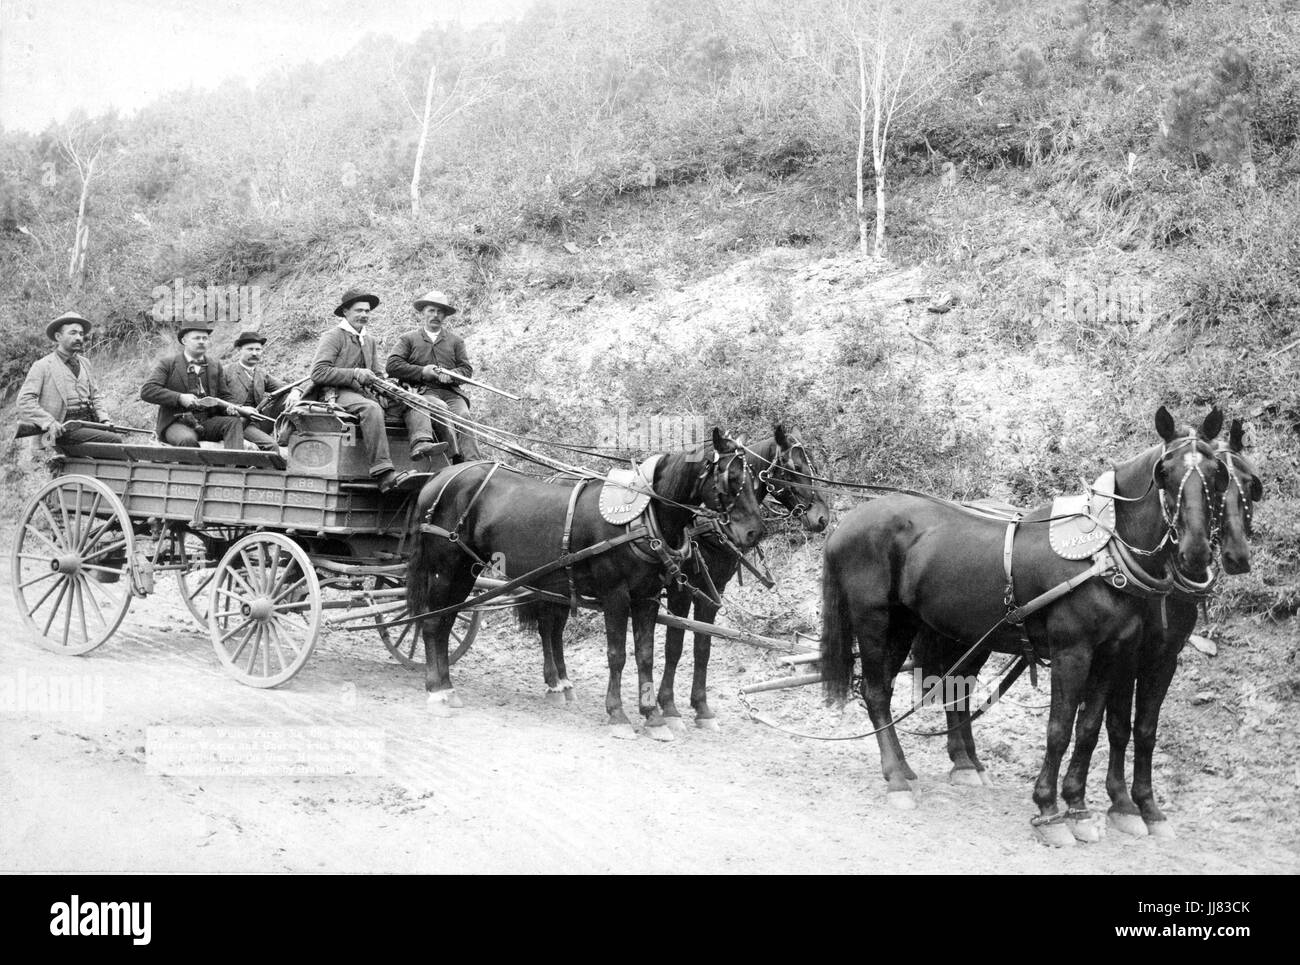 La WELLS FARGO EXPRESS COMPANY Le Trésor Deadwood Wagon avec quatre gardes armés transportant 250 000 dollars en lingots d'or de la grande mine Homestake à Deadwood, Dakota du Sud, en 1890 Banque D'Images